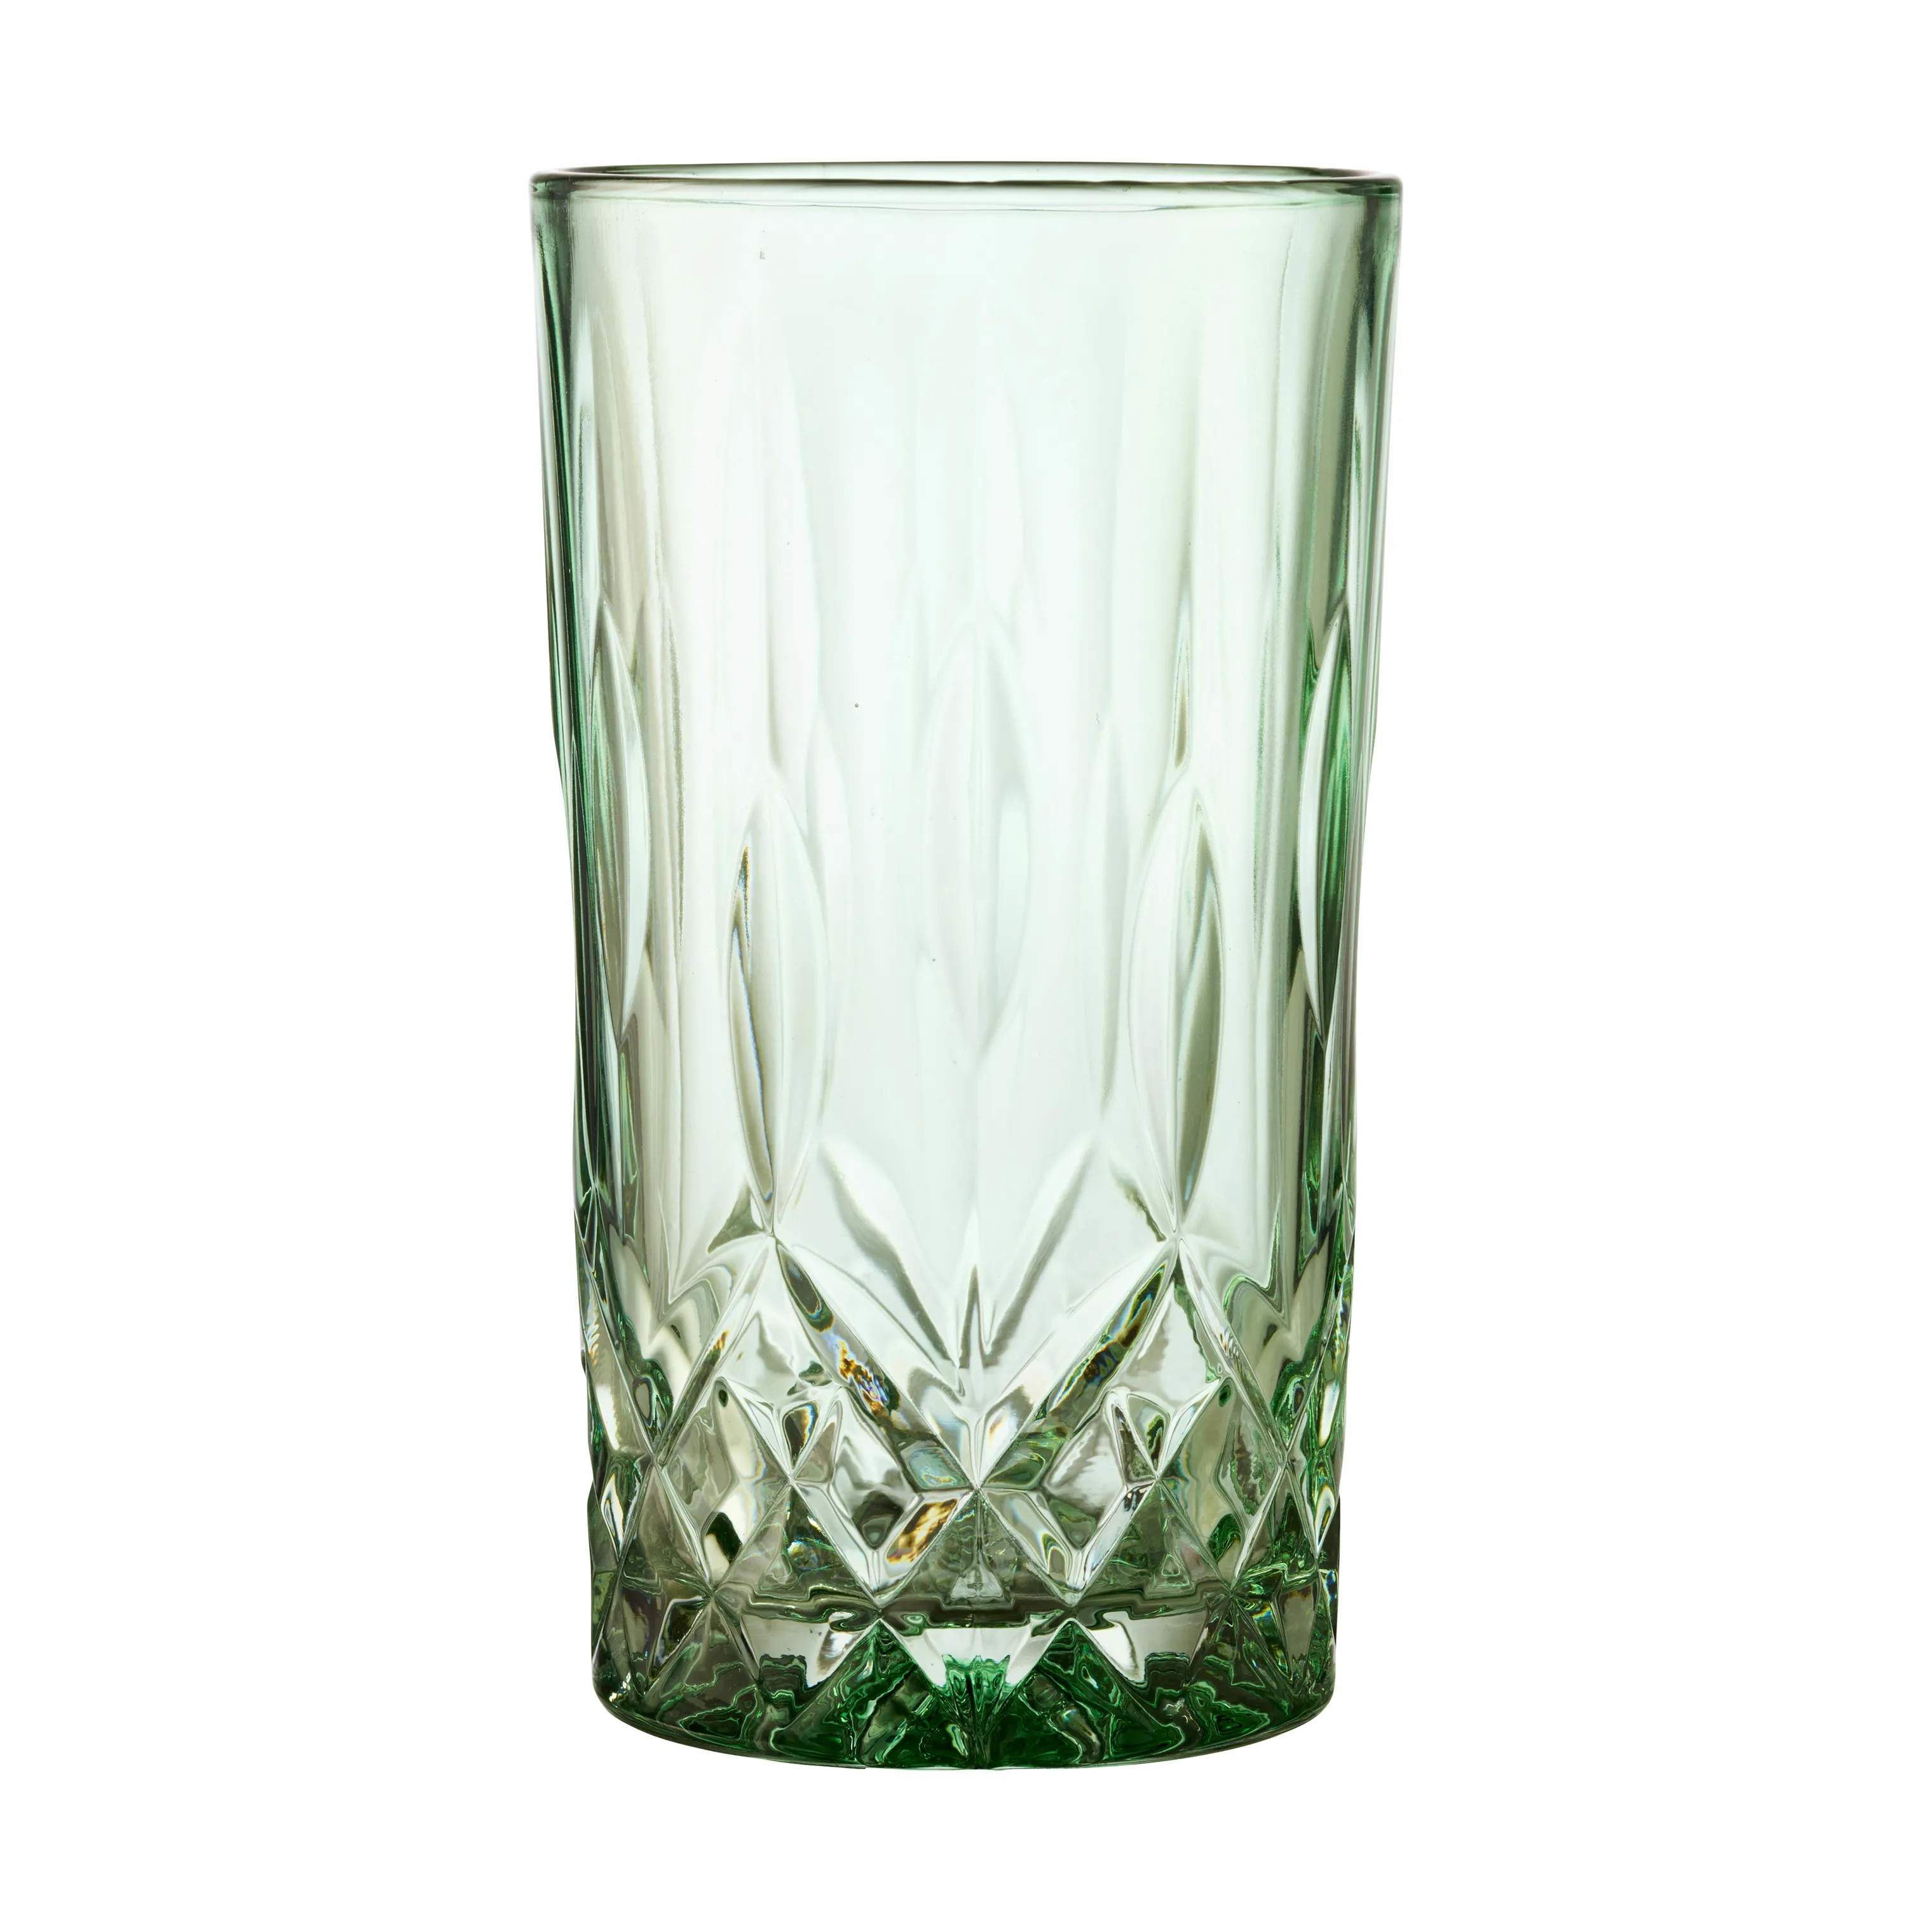 Sorrento Highballglas - 4 stk., grøn, large